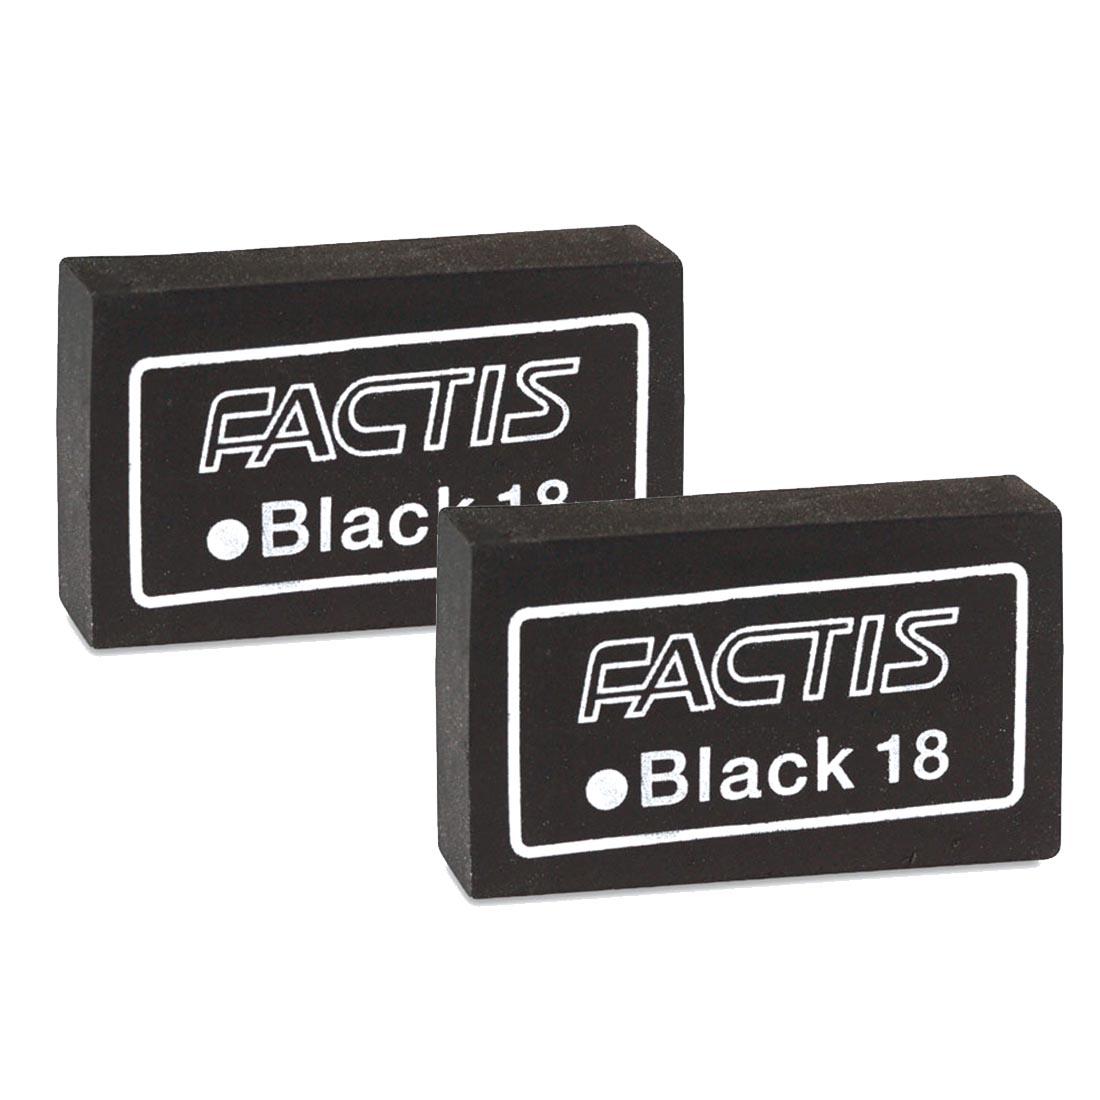 Two General's Factis Black Magic Erasers